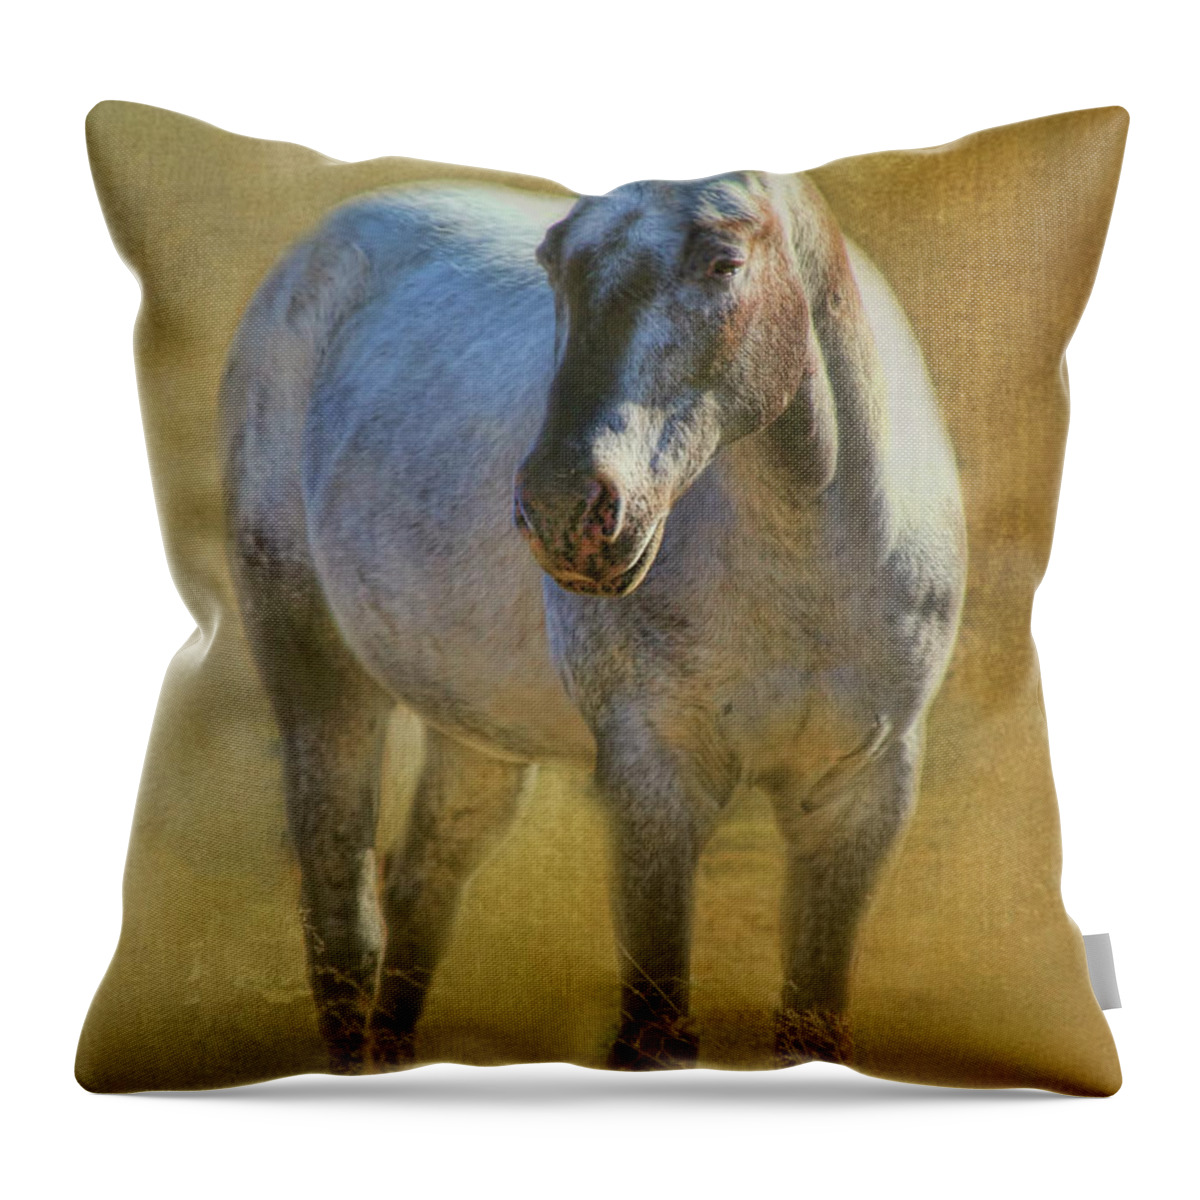 Horse Throw Pillow featuring the digital art A Texas Horse by Joan Bertucci